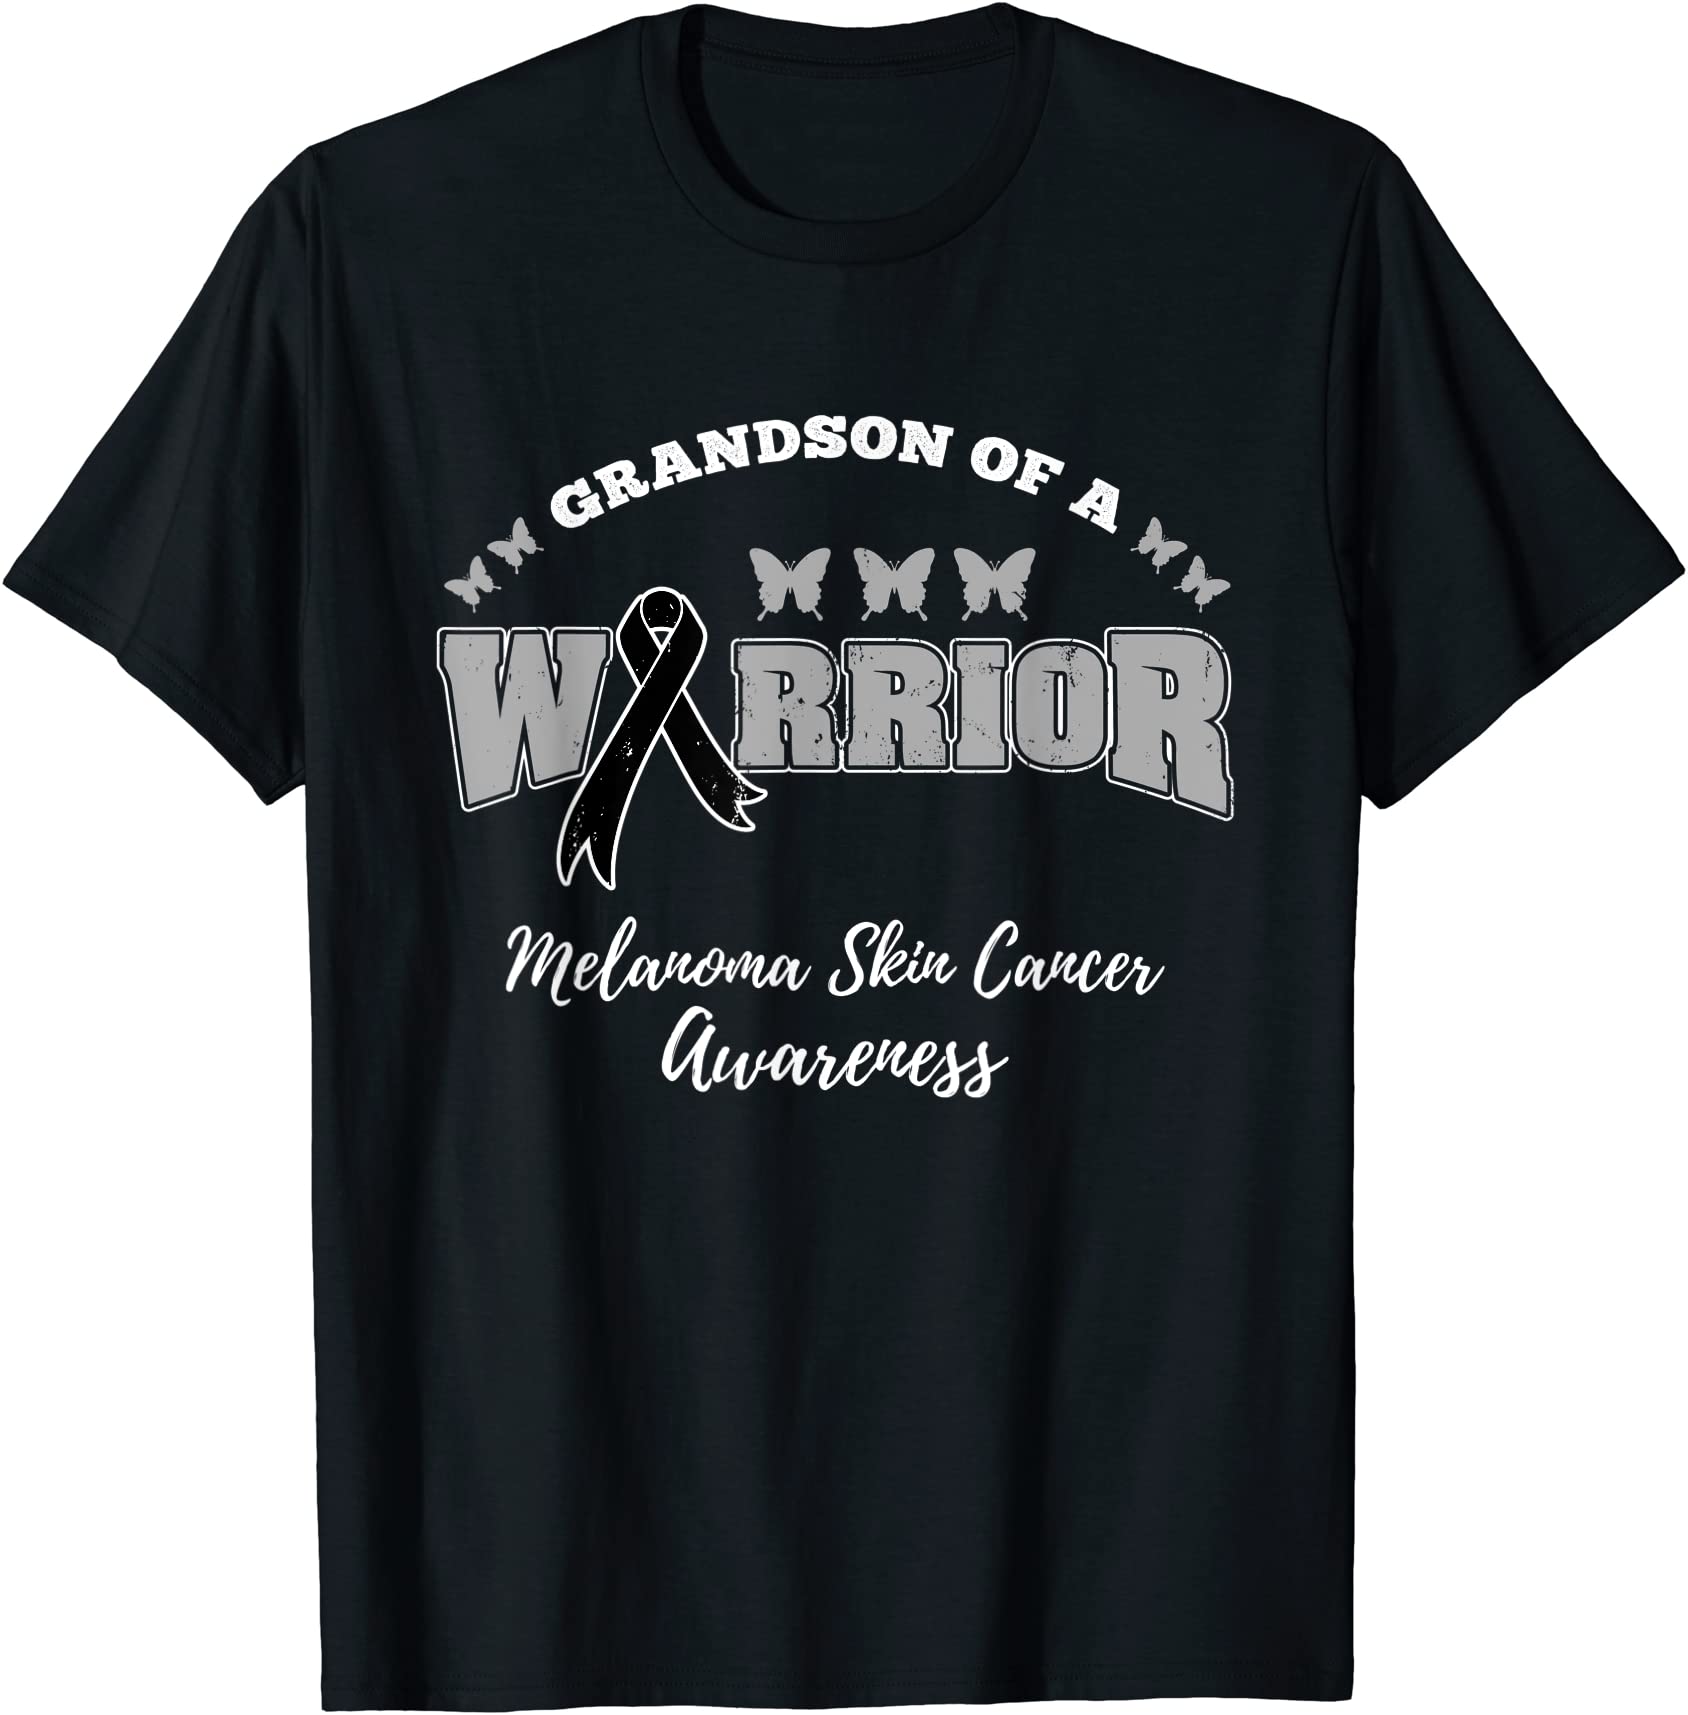 grandson of a warrior melanoma skin cancer awareness t shirt men - Buy ...